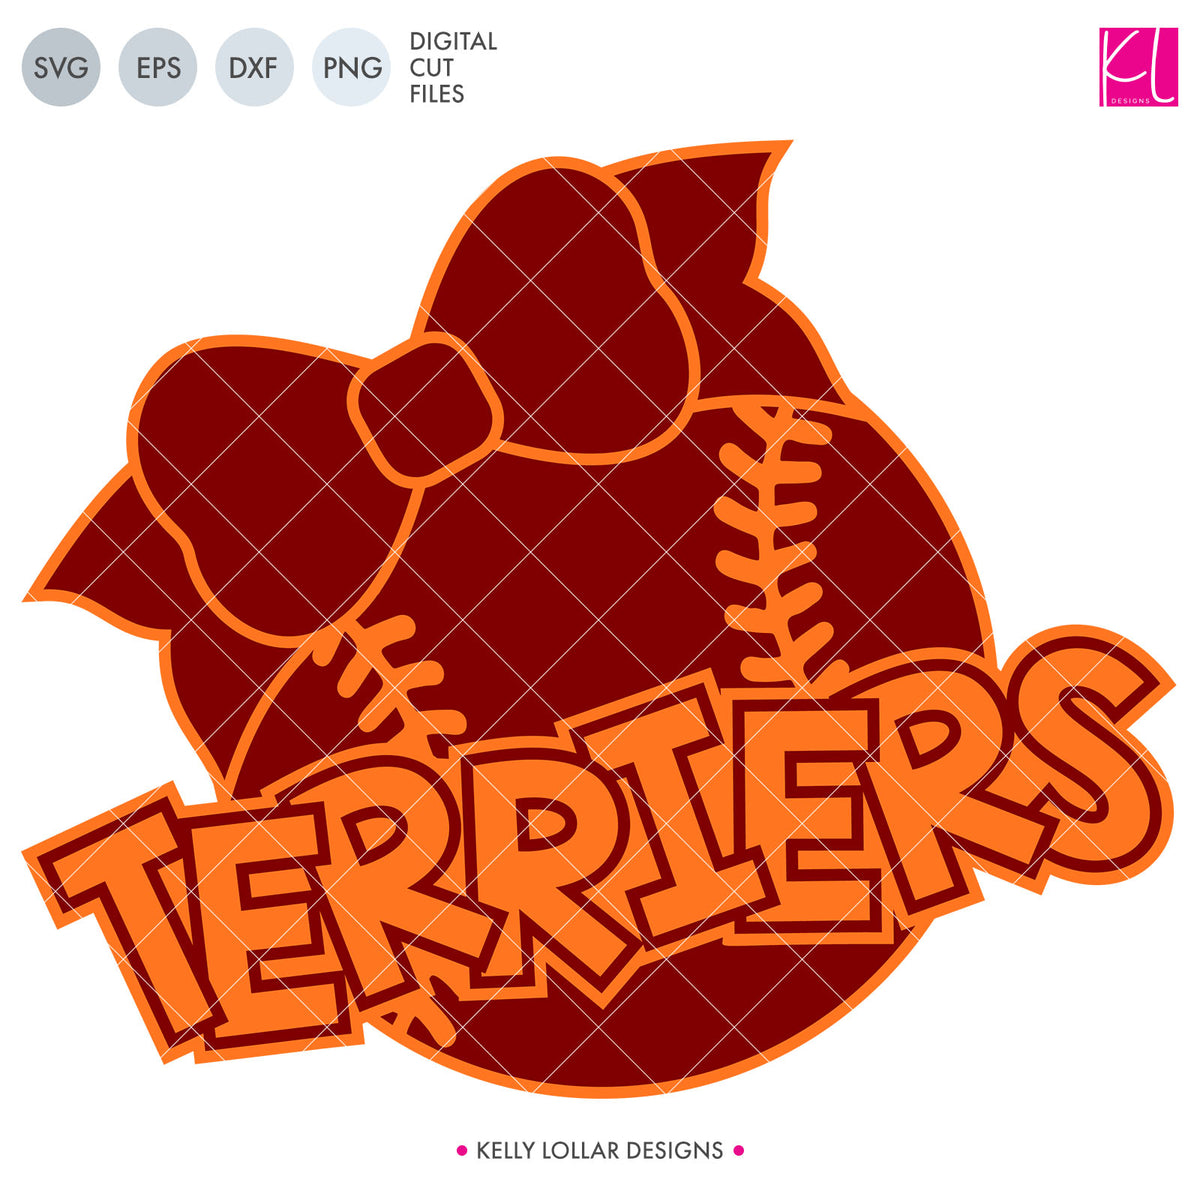 Terriers Baseball &amp; Softball Bundle | SVG DXF EPS PNG Cut Files